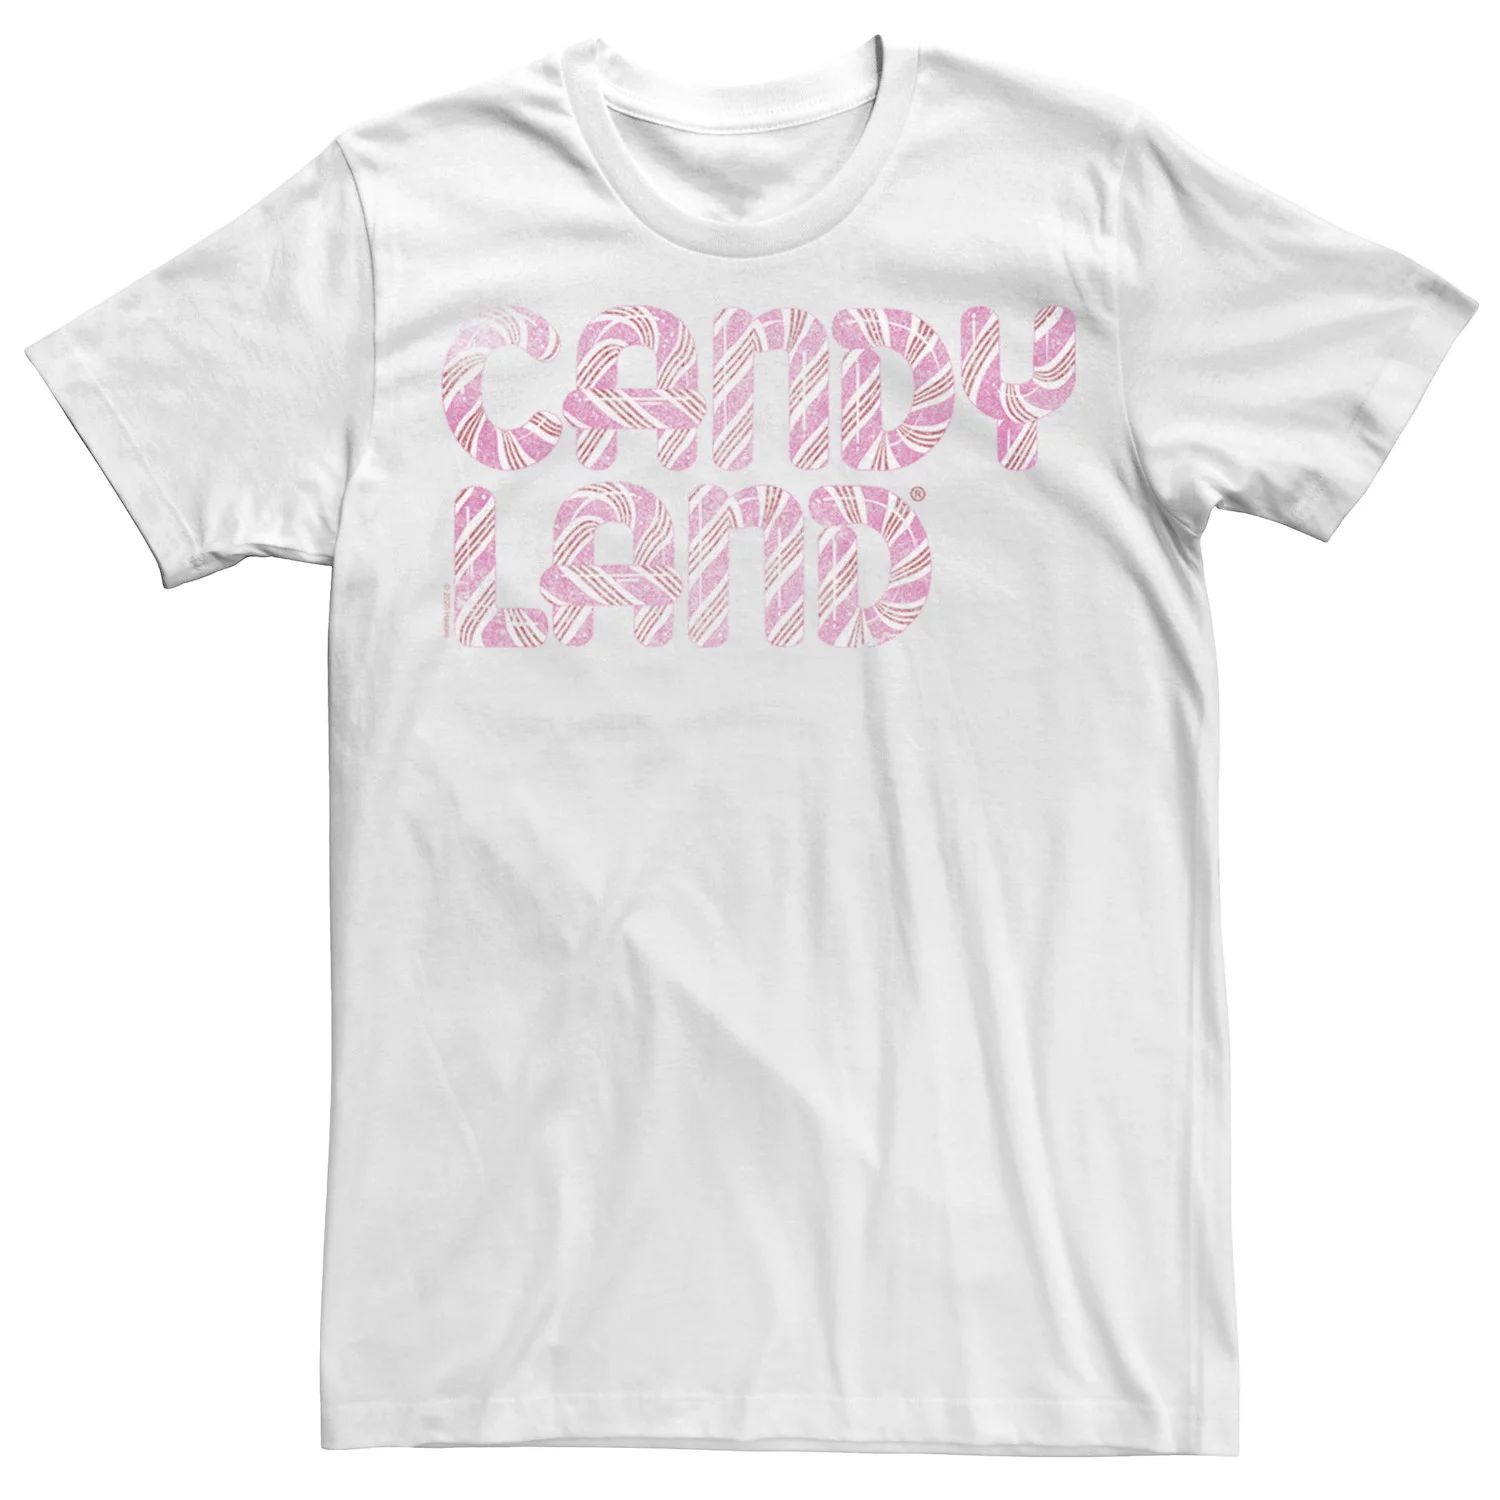 Мужская многослойная футболка с рваным логотипом Candy Land Licensed Character